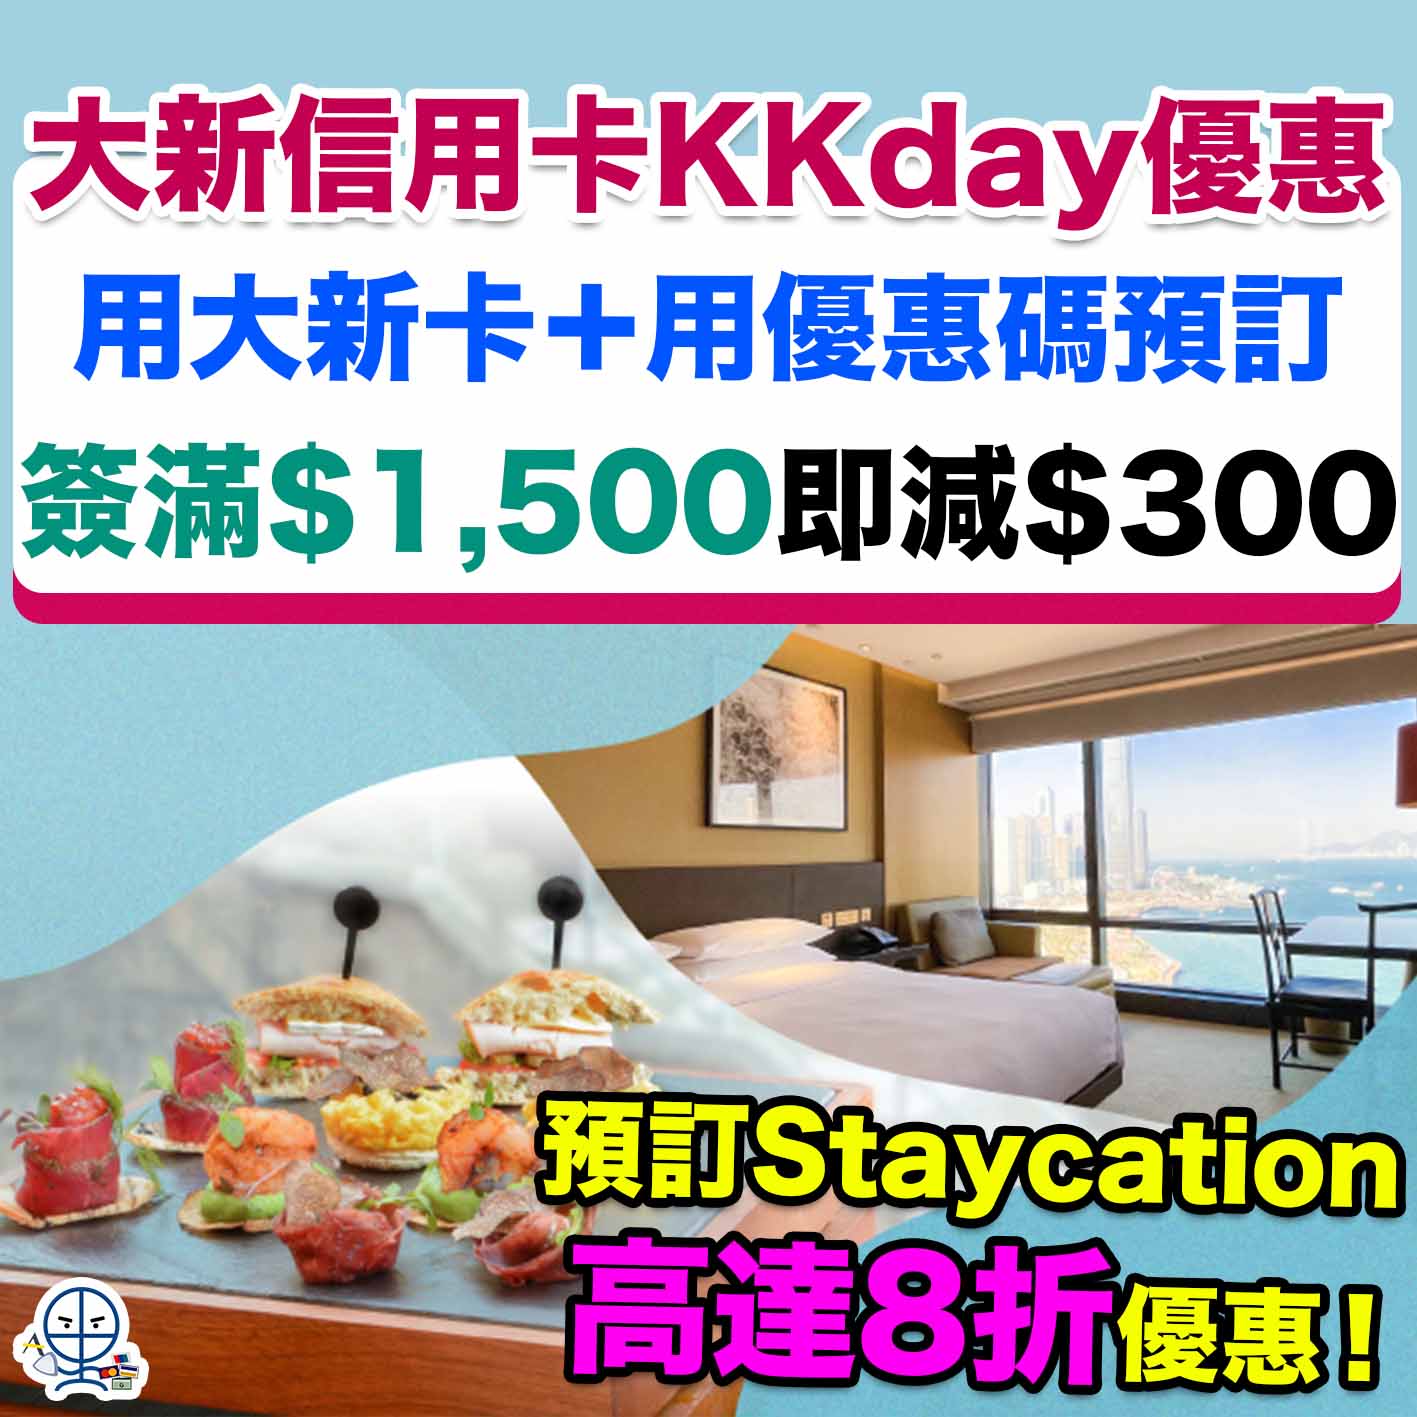 大新信用卡-KKday優惠-Staycation優惠-DSB信用卡